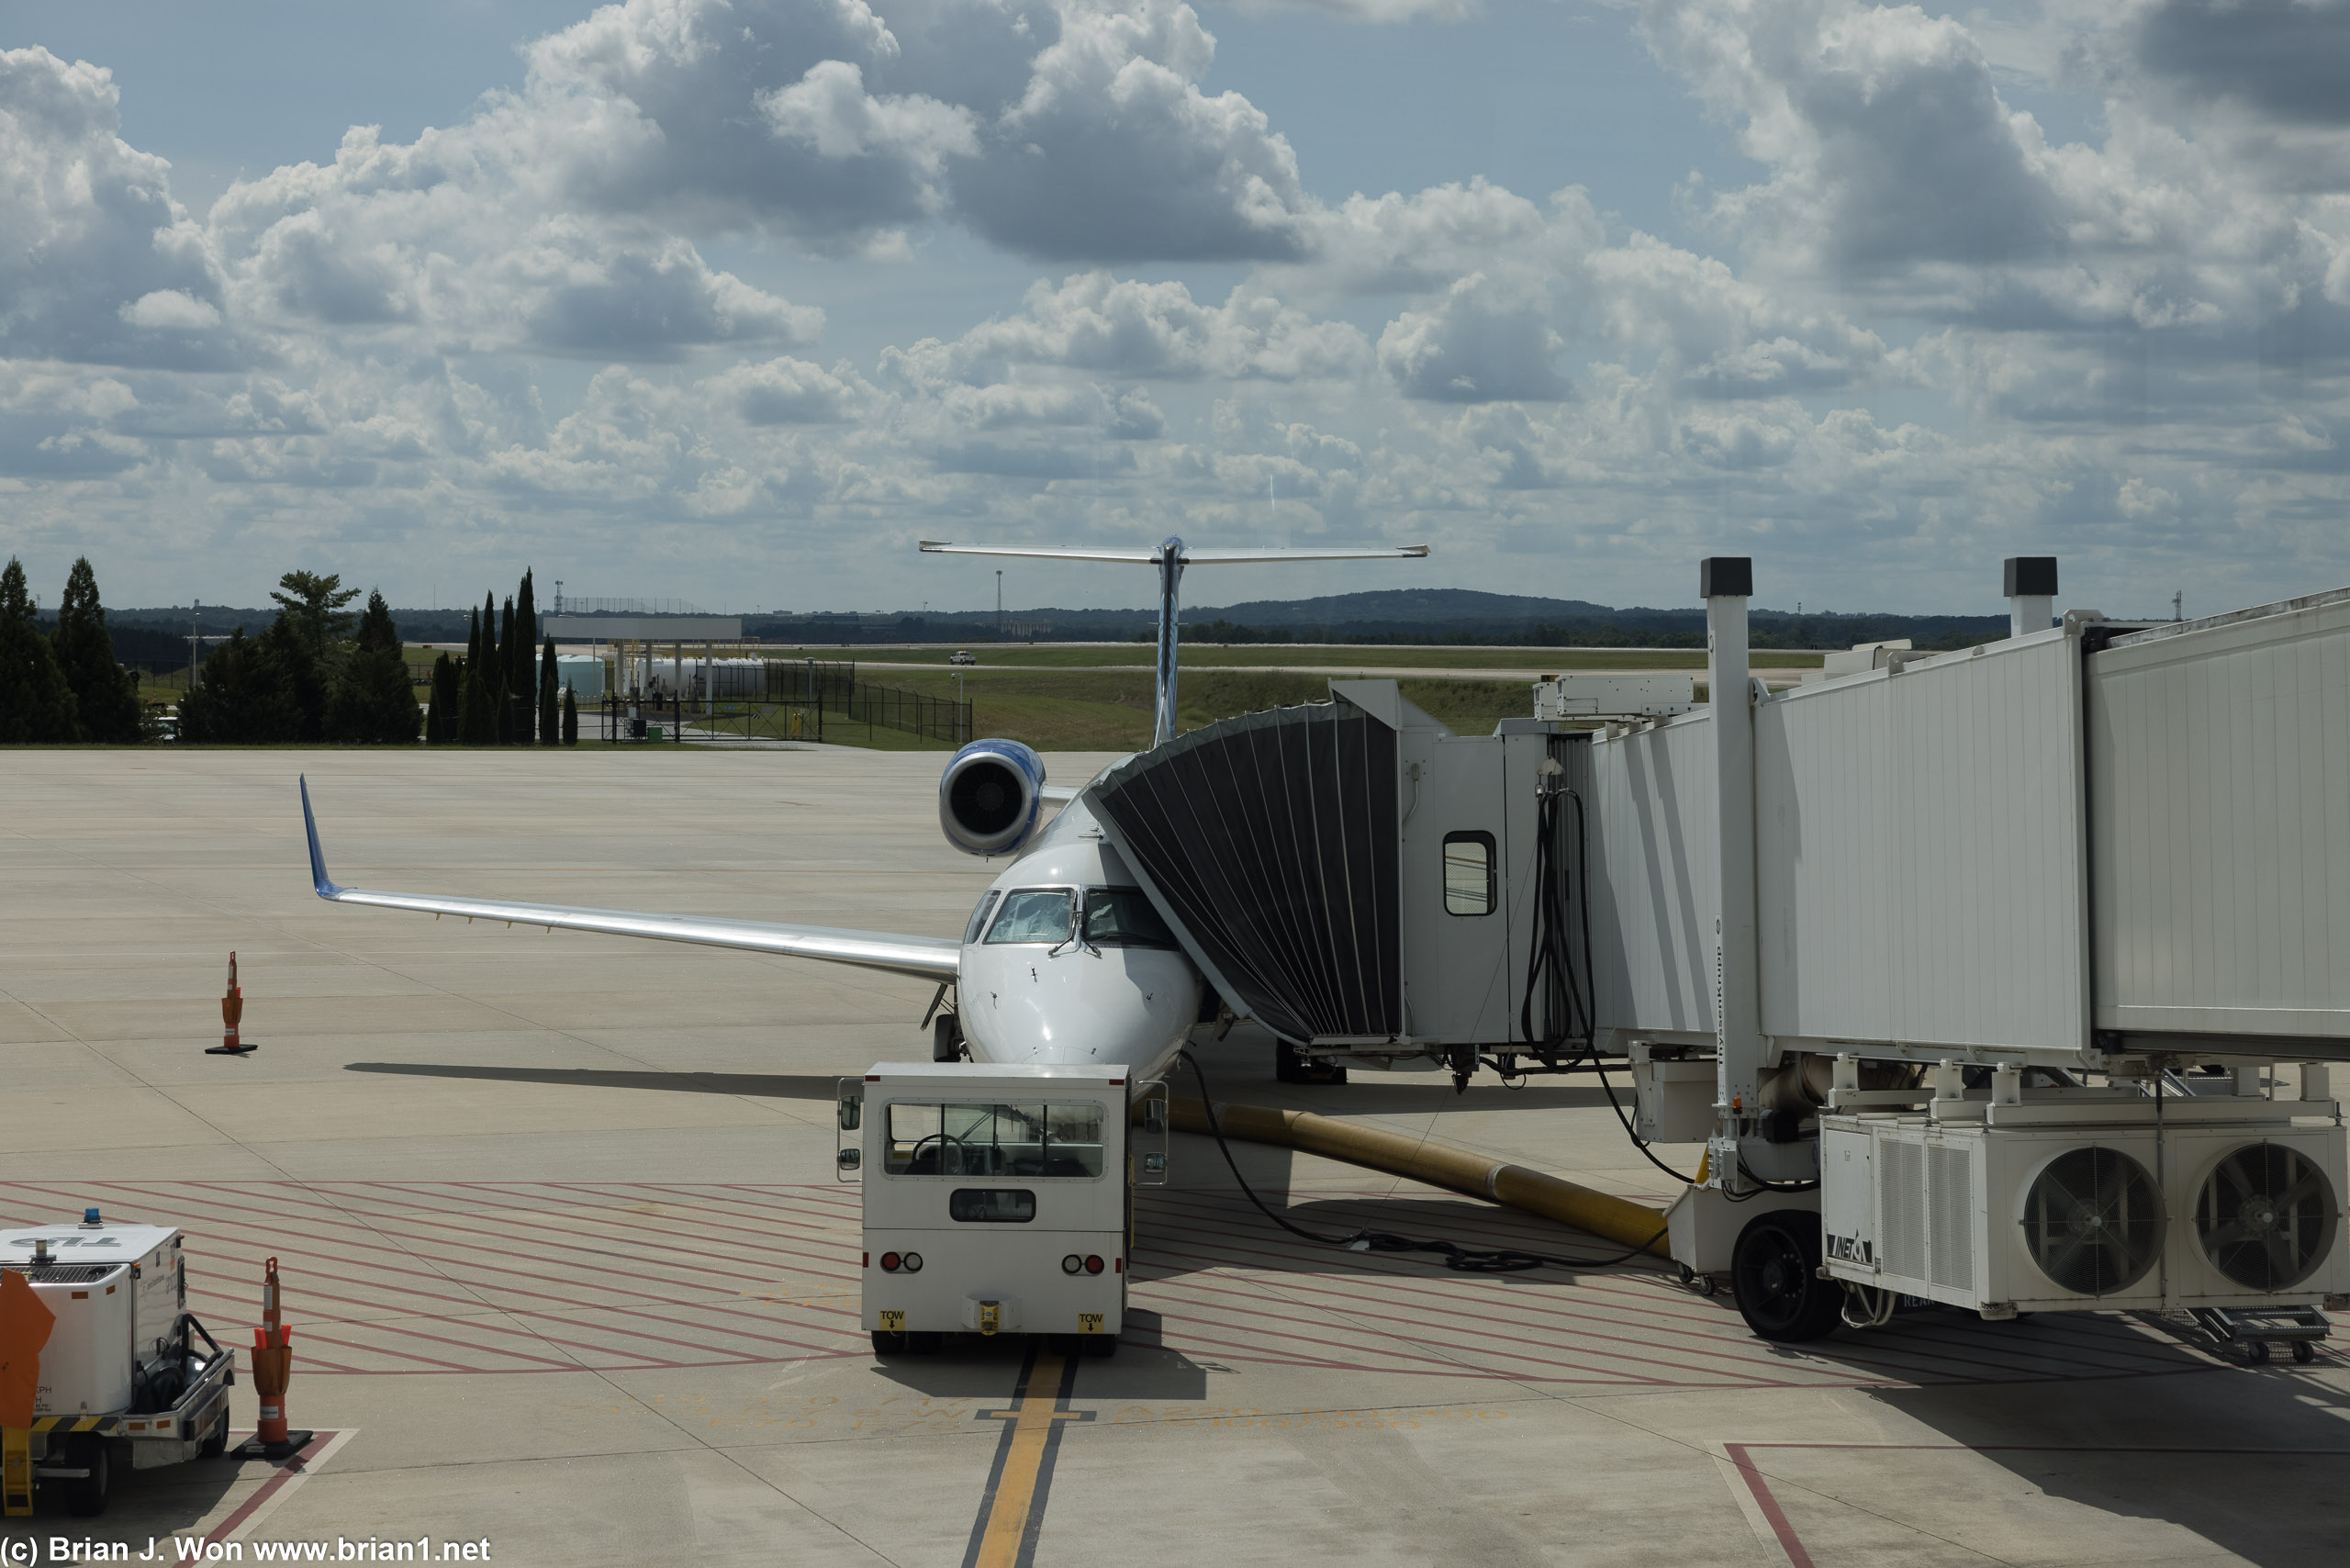 Tiny United Express CRJ-200 starts the journey home.